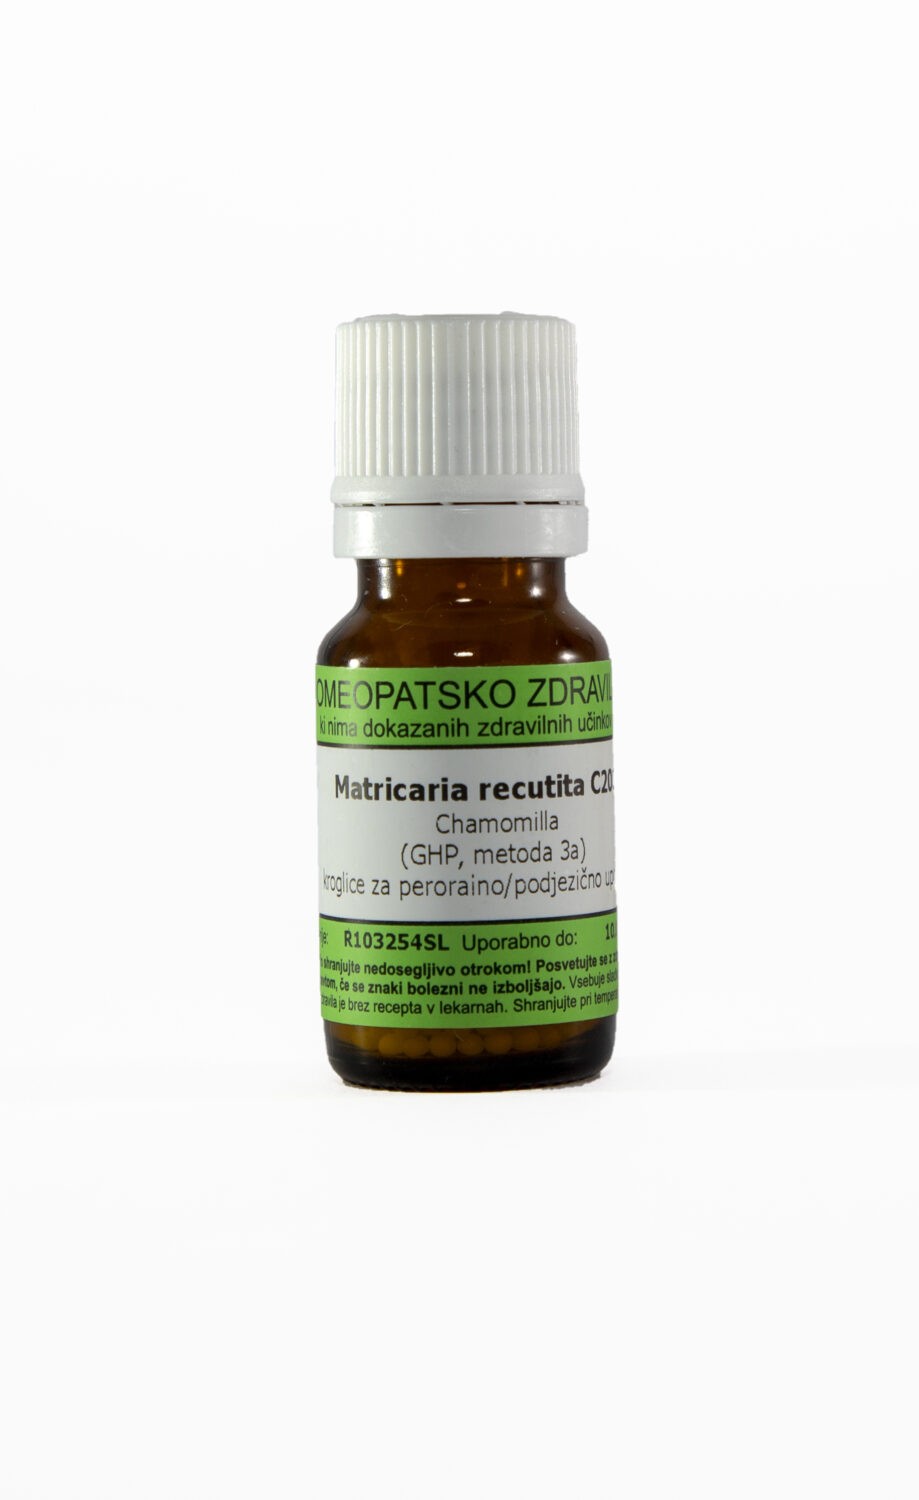 Matricaria recutita C6 homeopatske kroglice, 10 g